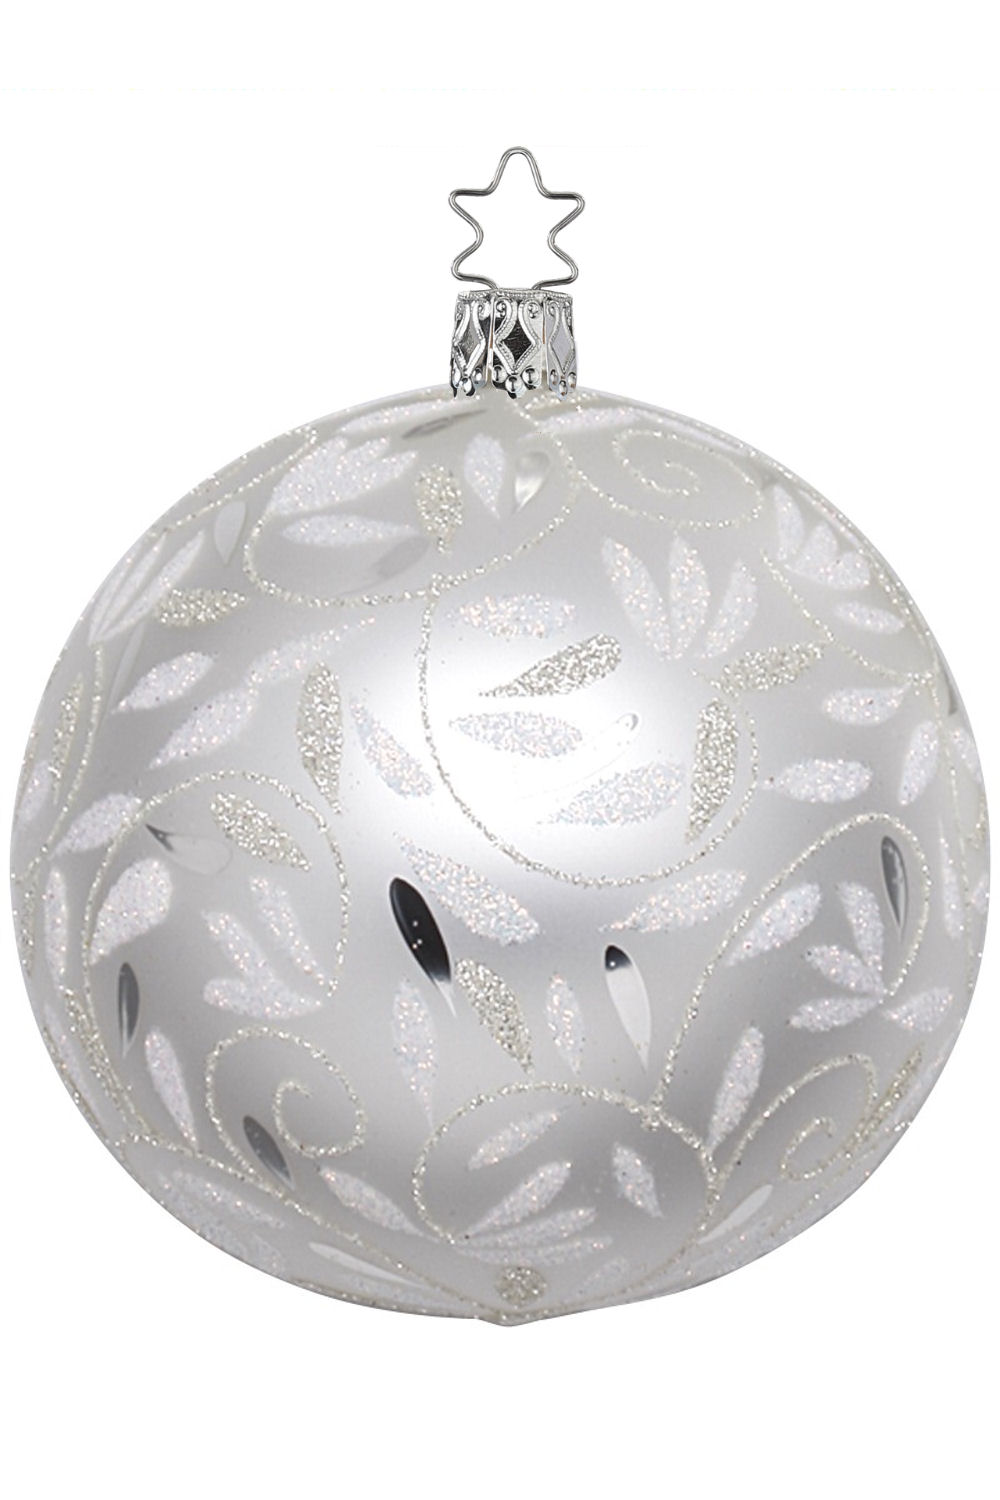 Inge Glas  Ball 10 cm Evening Star white matt 20055T010 German Glass Ornament 